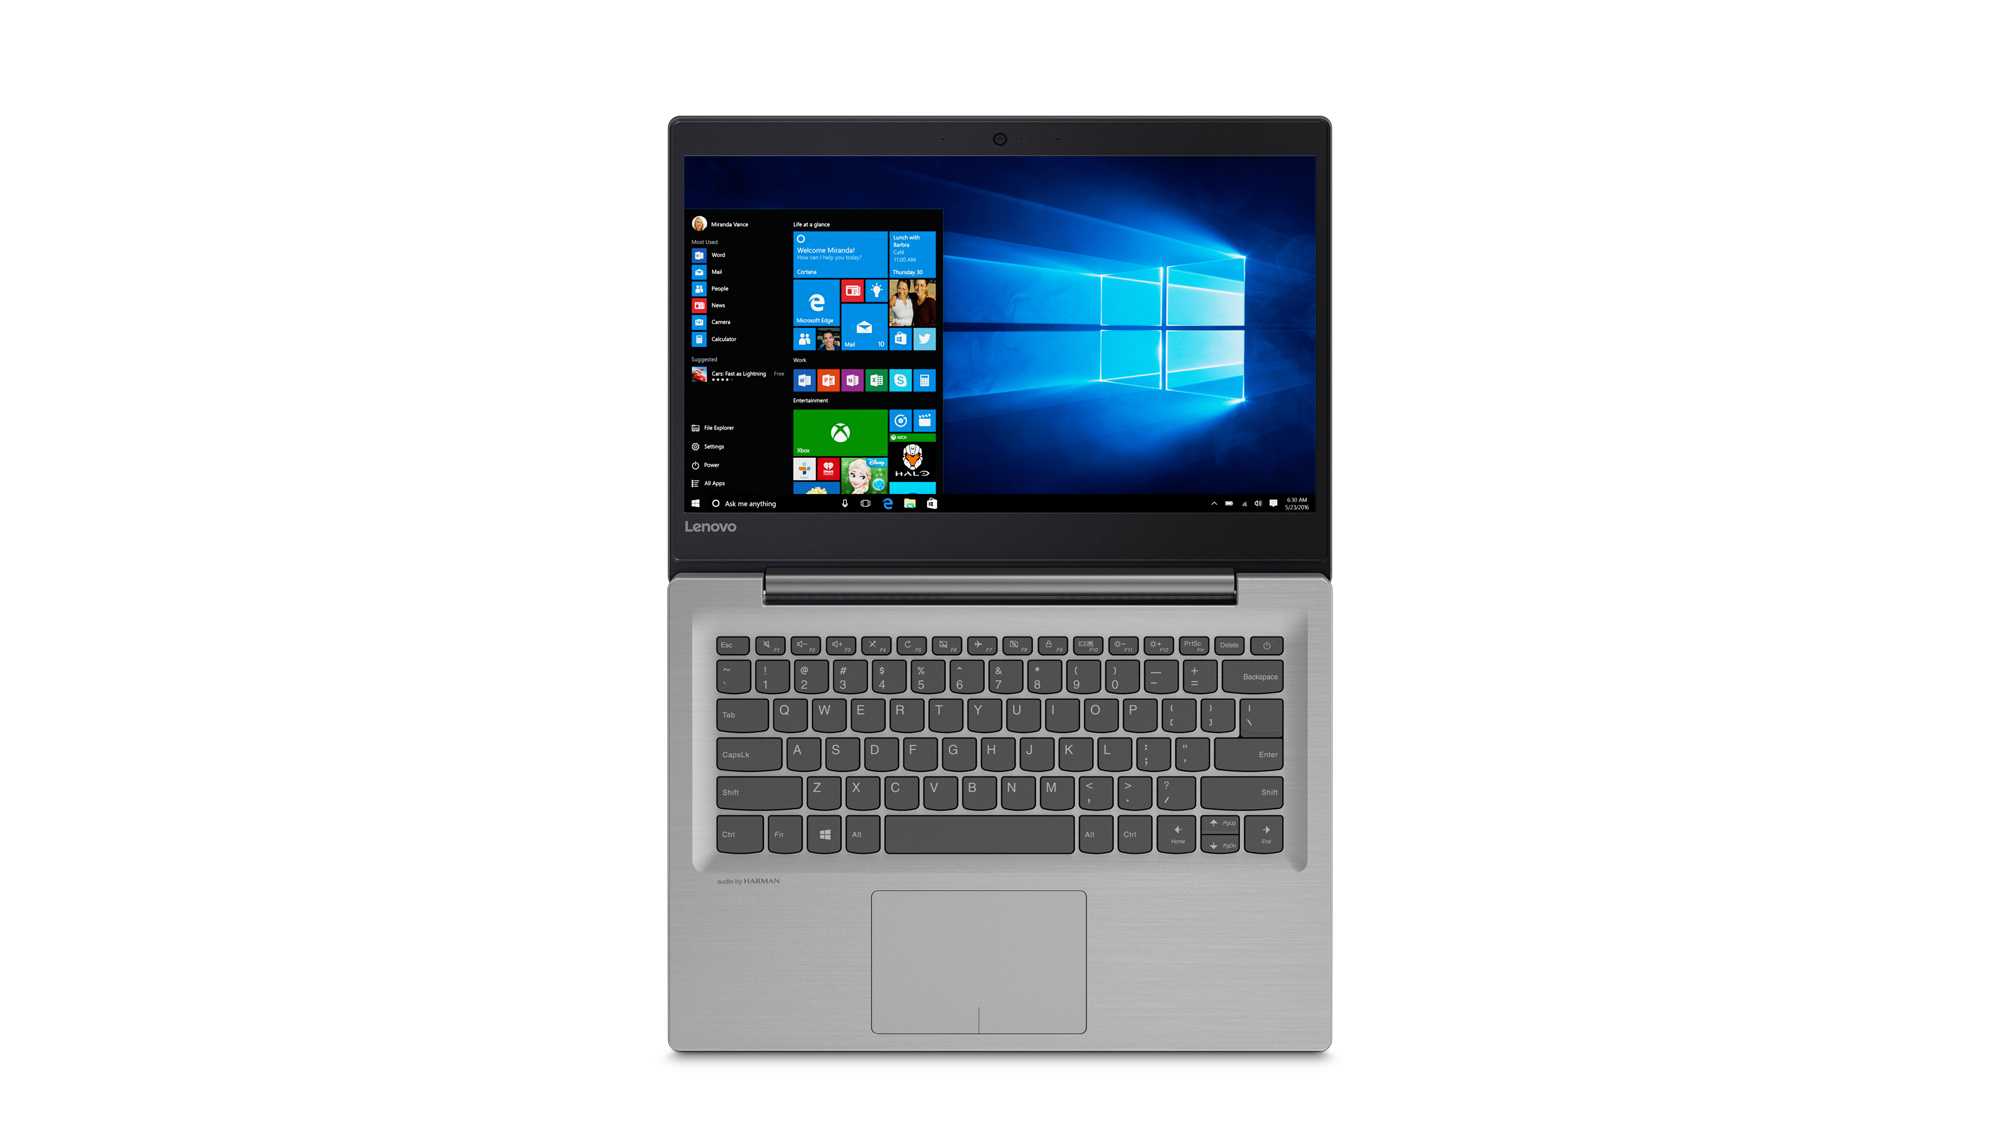 Ноутбук lenovo ideapad 3 320s-13ikb (81ak009xru) — купить, цена и характеристики, отзывы